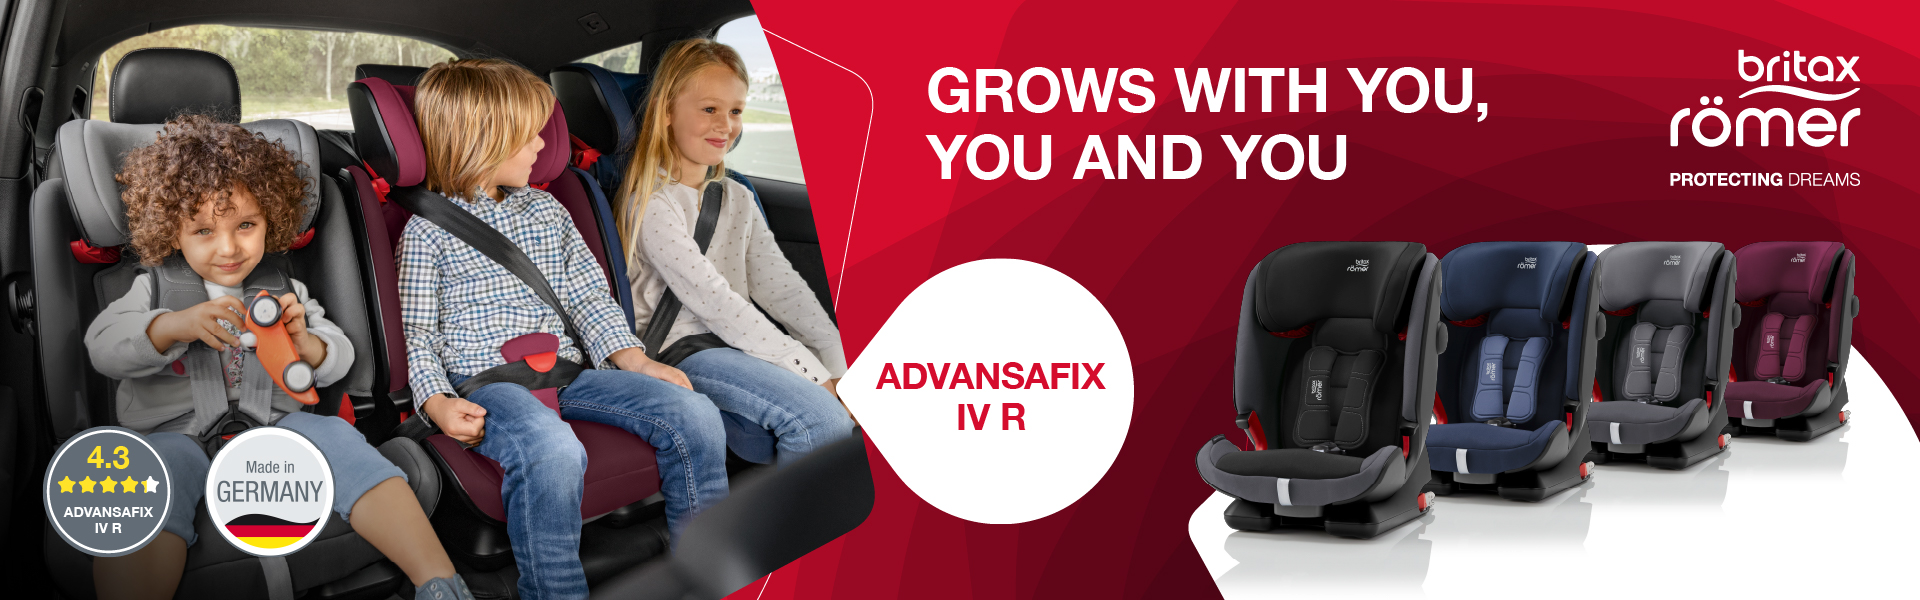 Britax Advansafix IVR Car Seat